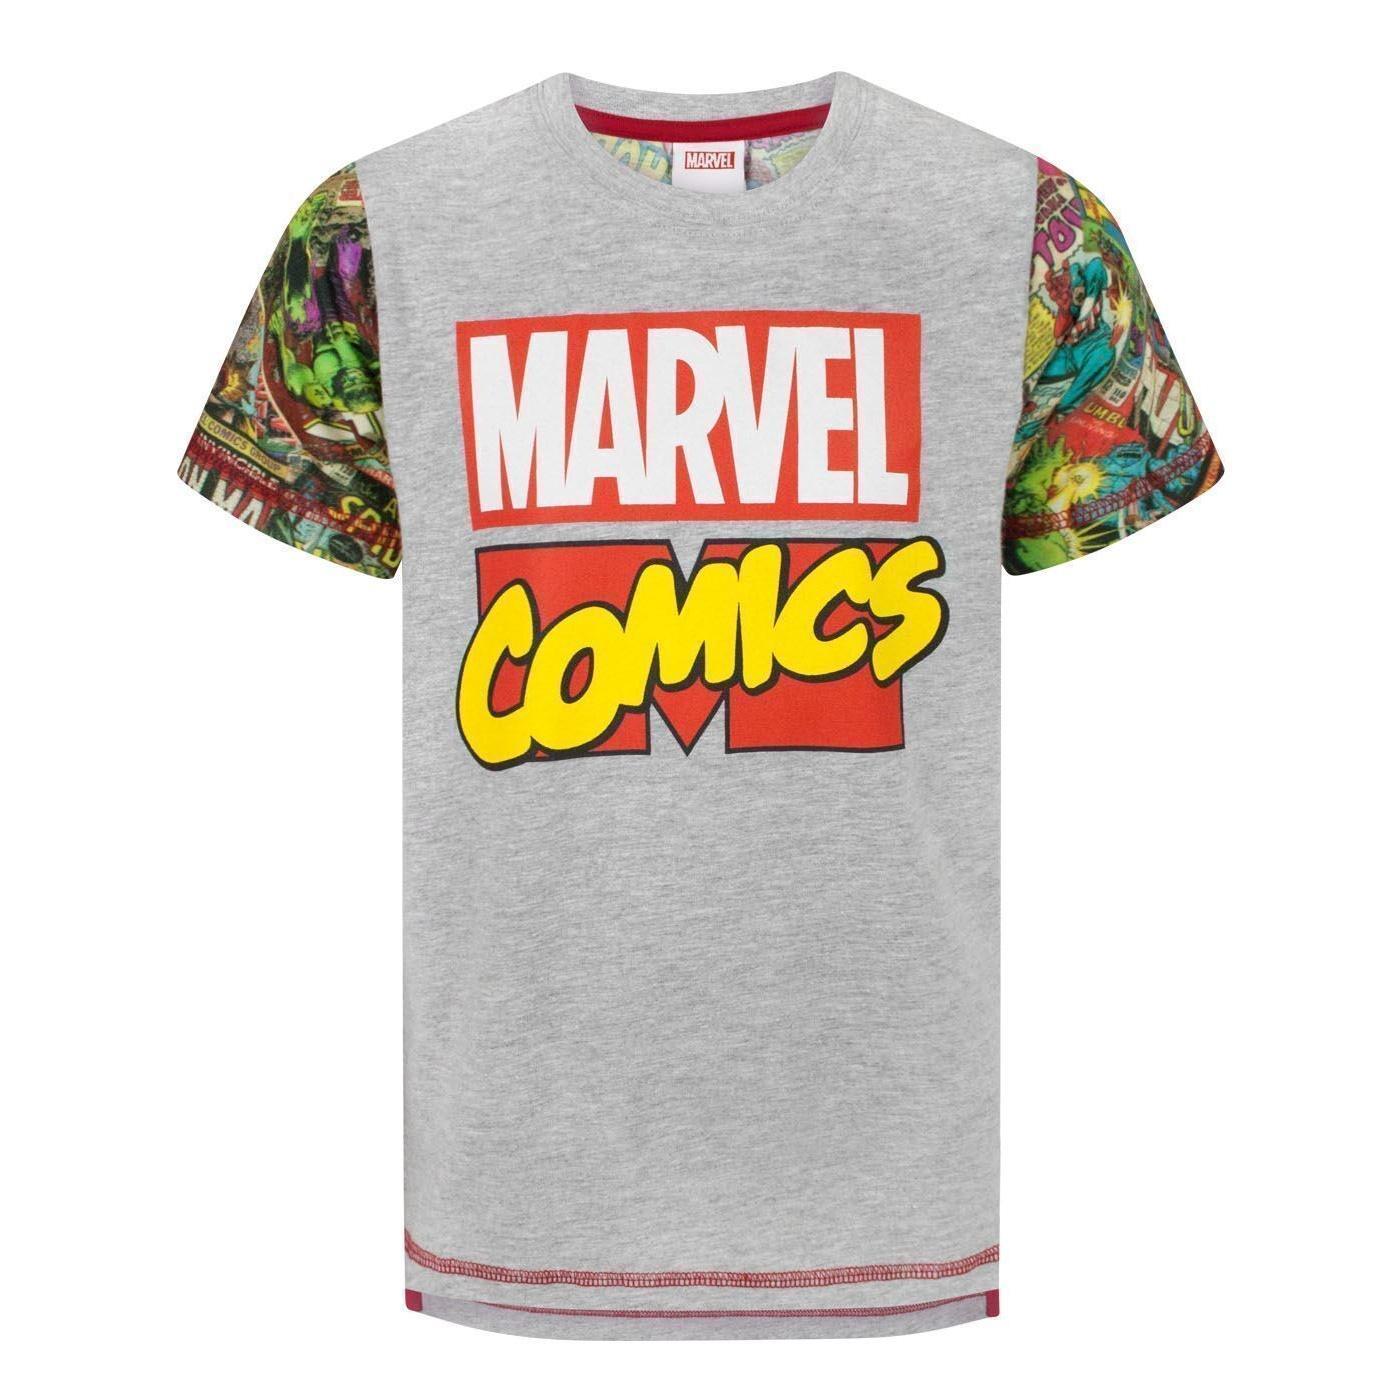 Marvel Comics Boys Printed T-Shirt (Heather Grey/Red/Green) (9-10 Years)